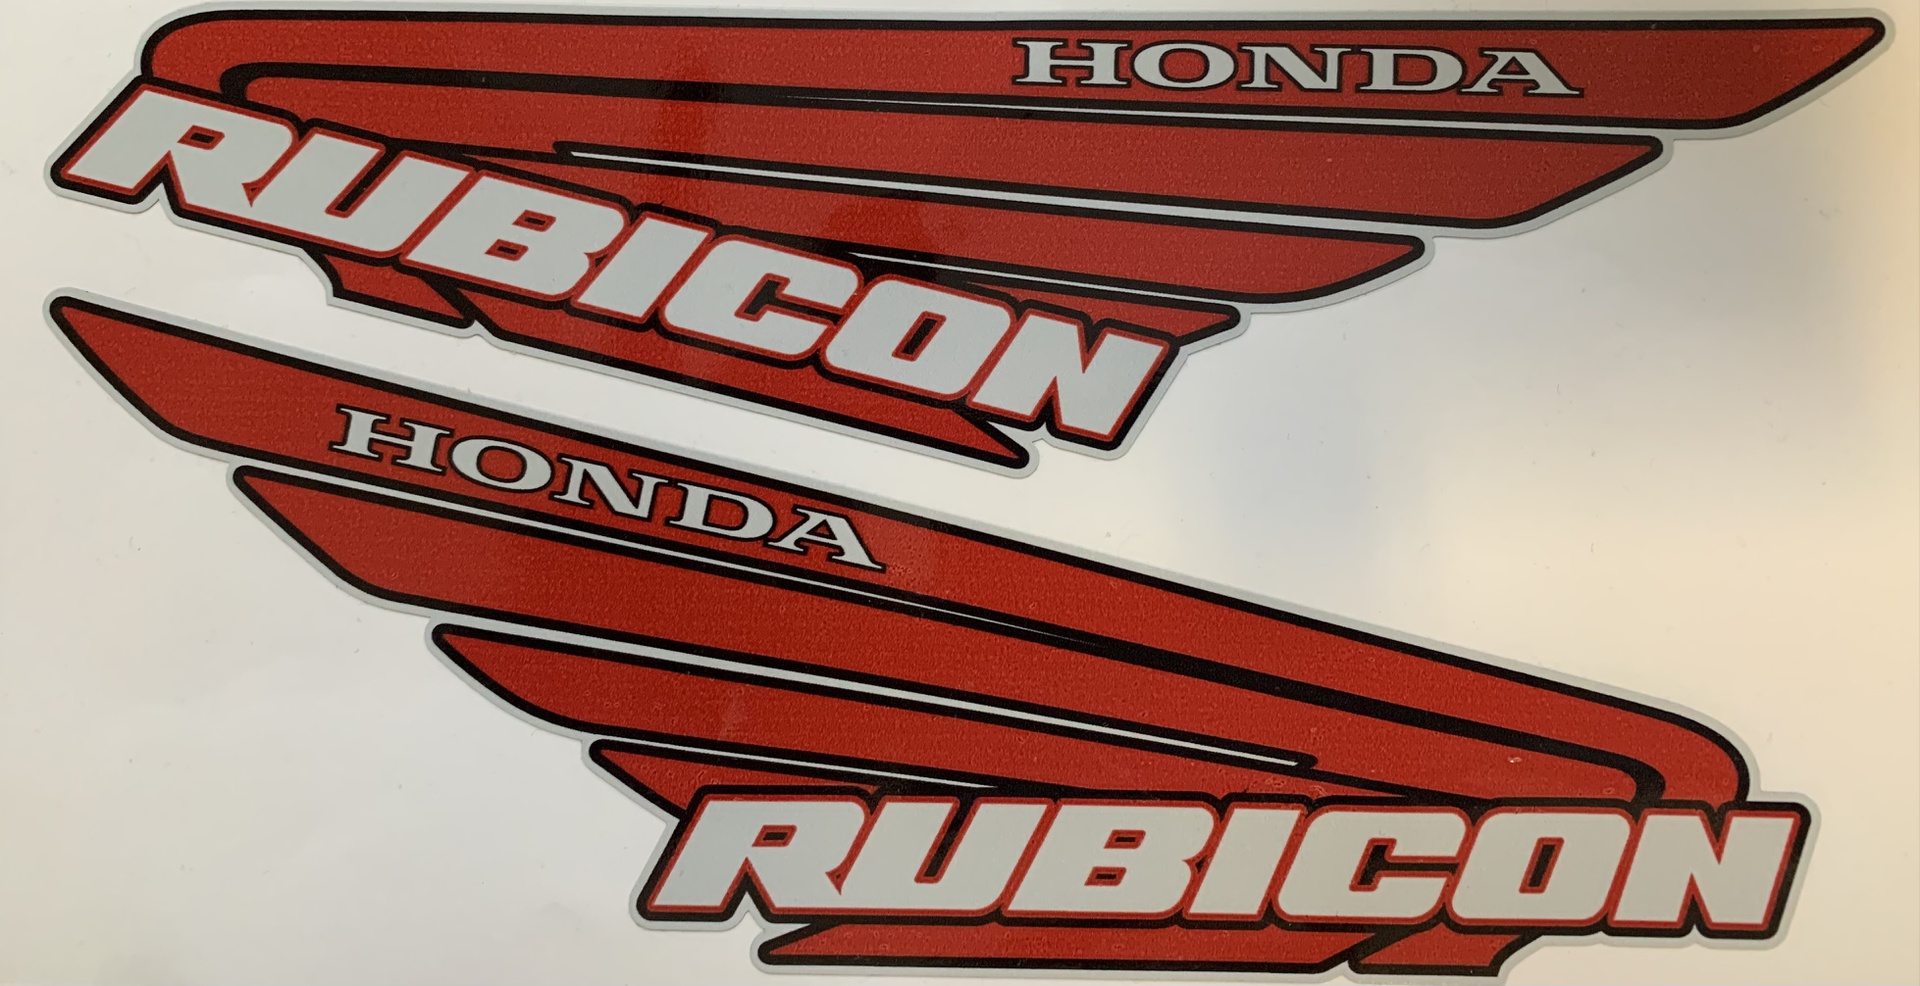 [ST-9000-24] Autocollant Honda Rubicon Rouge Avenger (ST-9000-24)